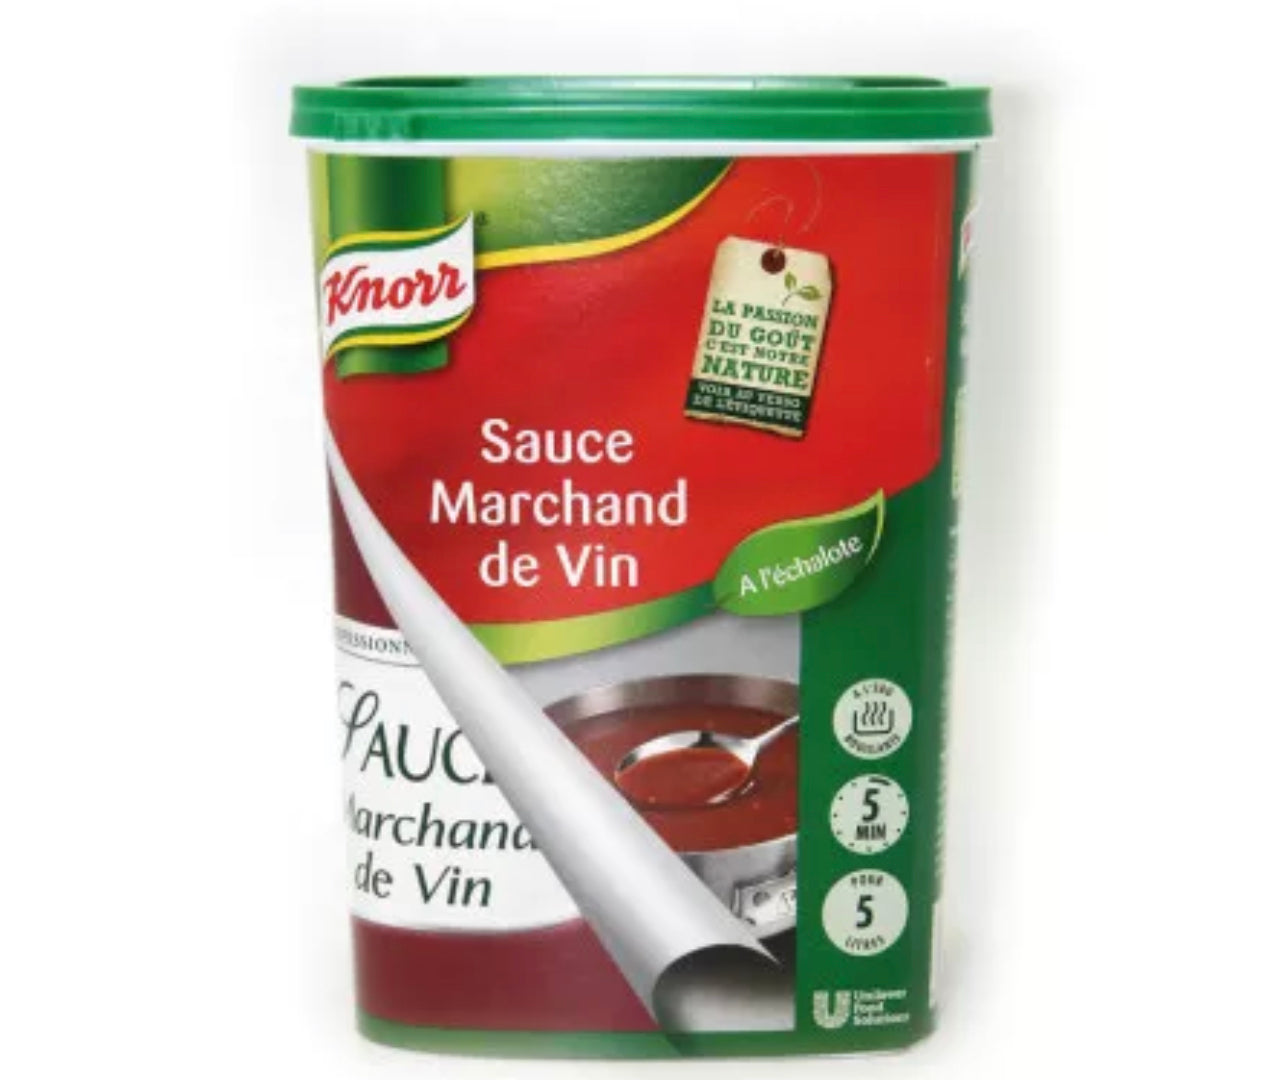 Dehydrated Marchand de Vin sauce - 850g